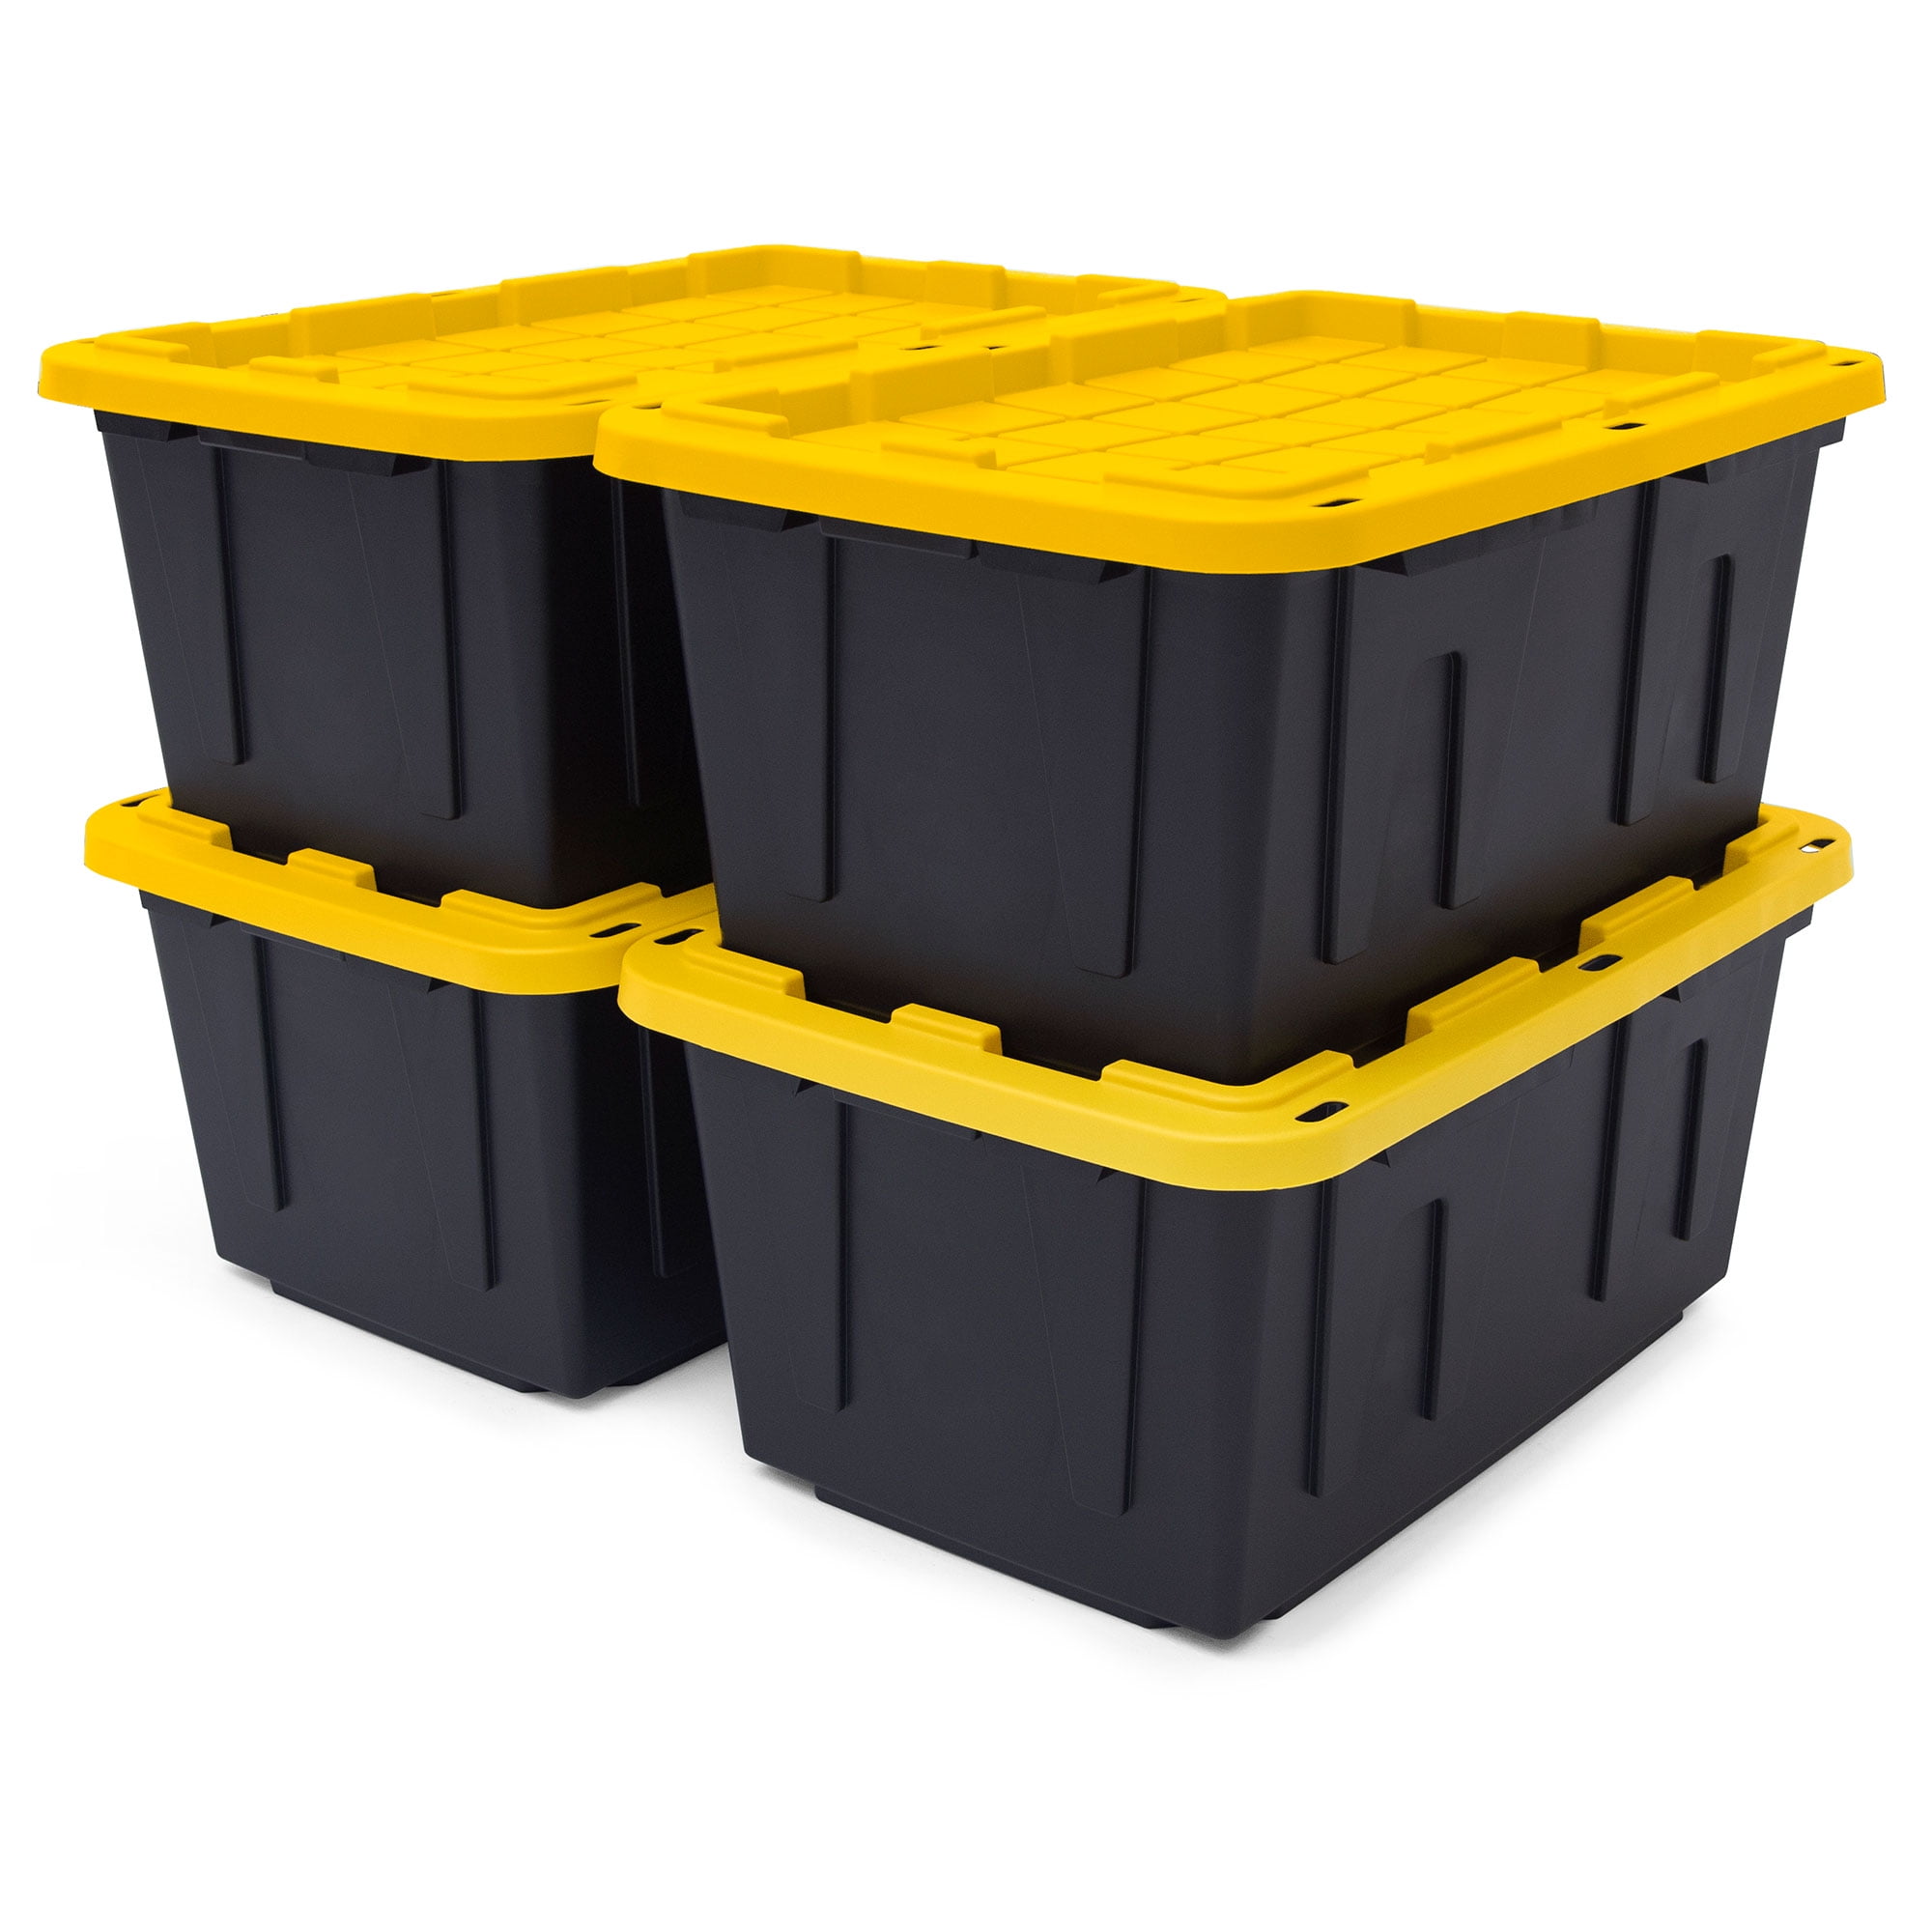 27 gal Black/Orange Tough Box Storage Tote by Fleet Farm at Fleet Farm